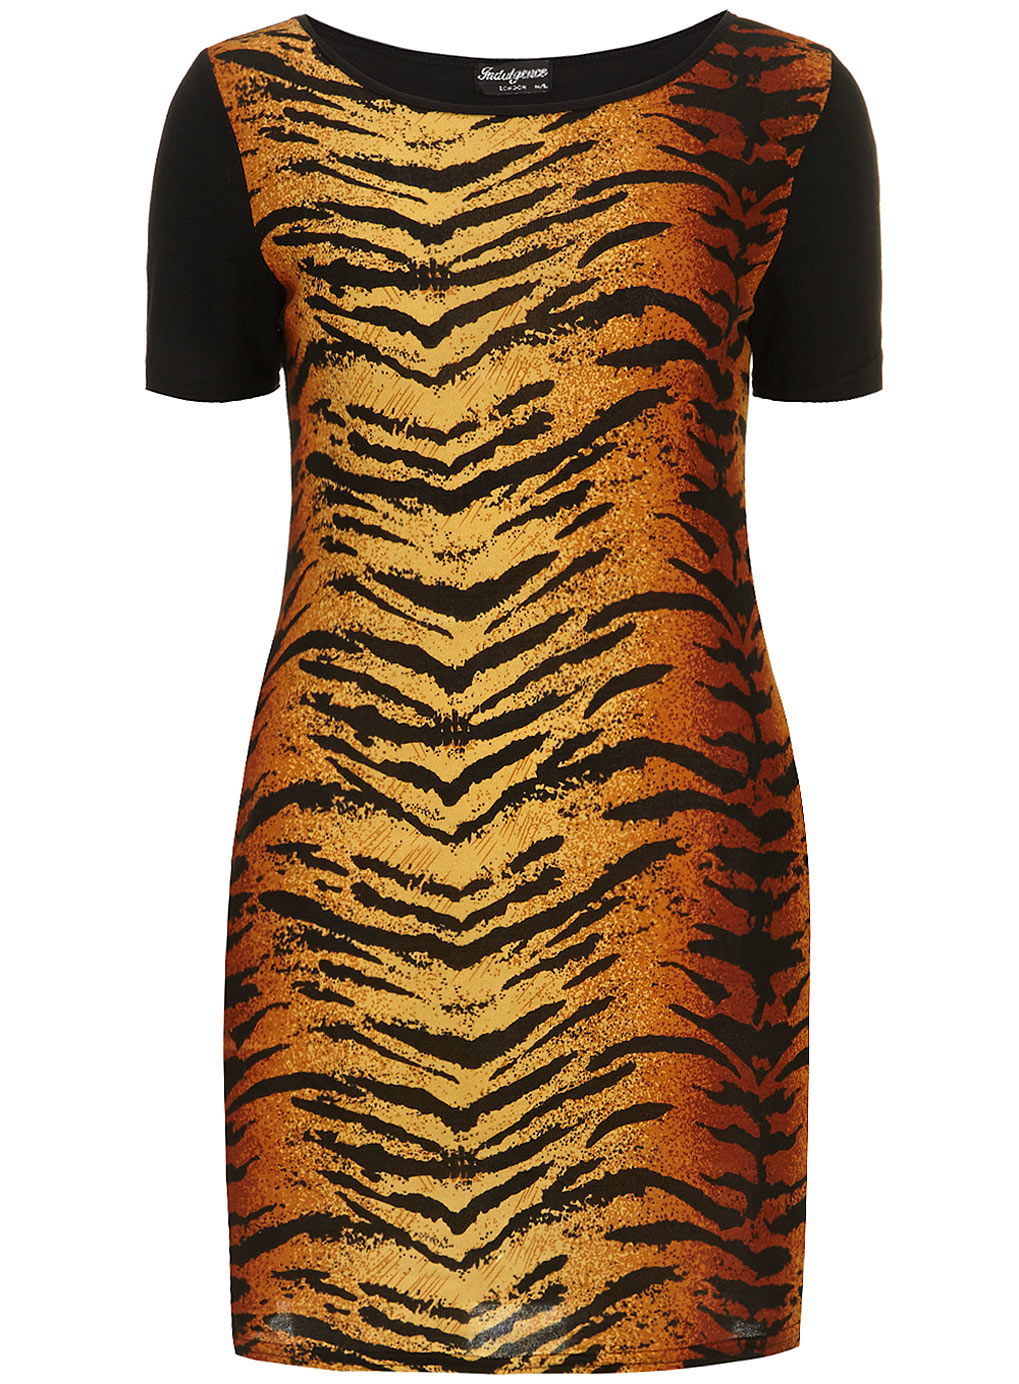 Indulgence Black tiger T-shirt dress 61460169